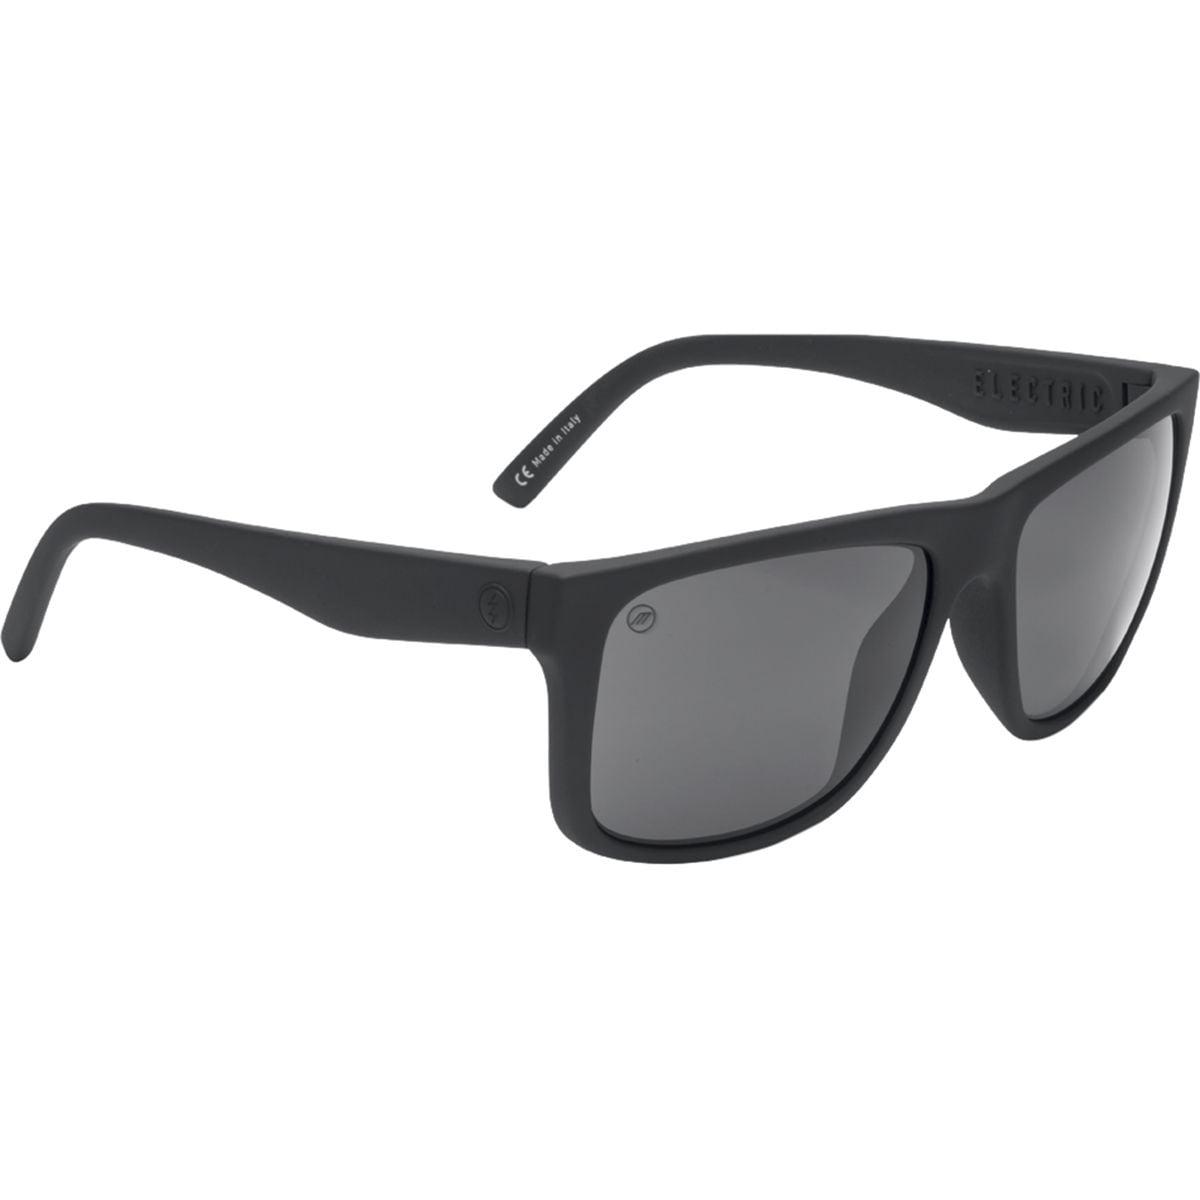 Electric Swingarm XL Sunglasses - Accessories